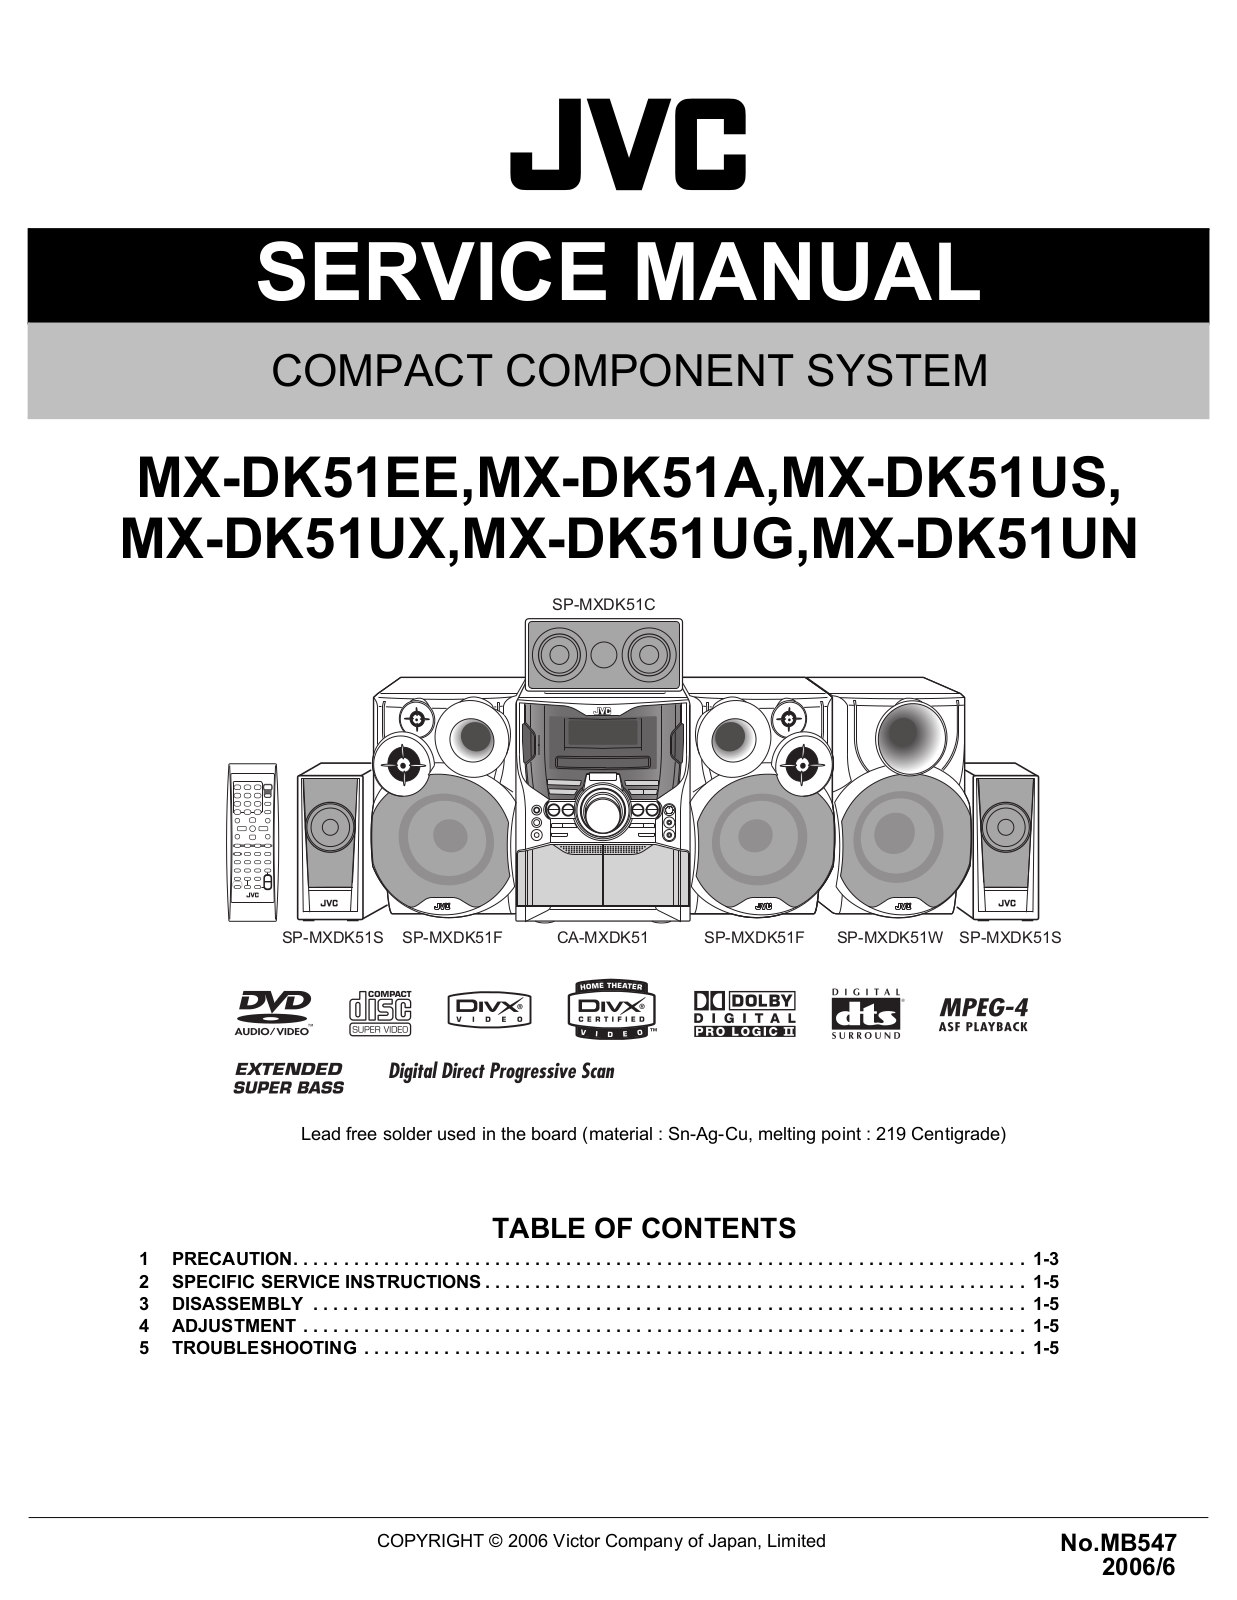 Jvc MX-DK51 Service Manual